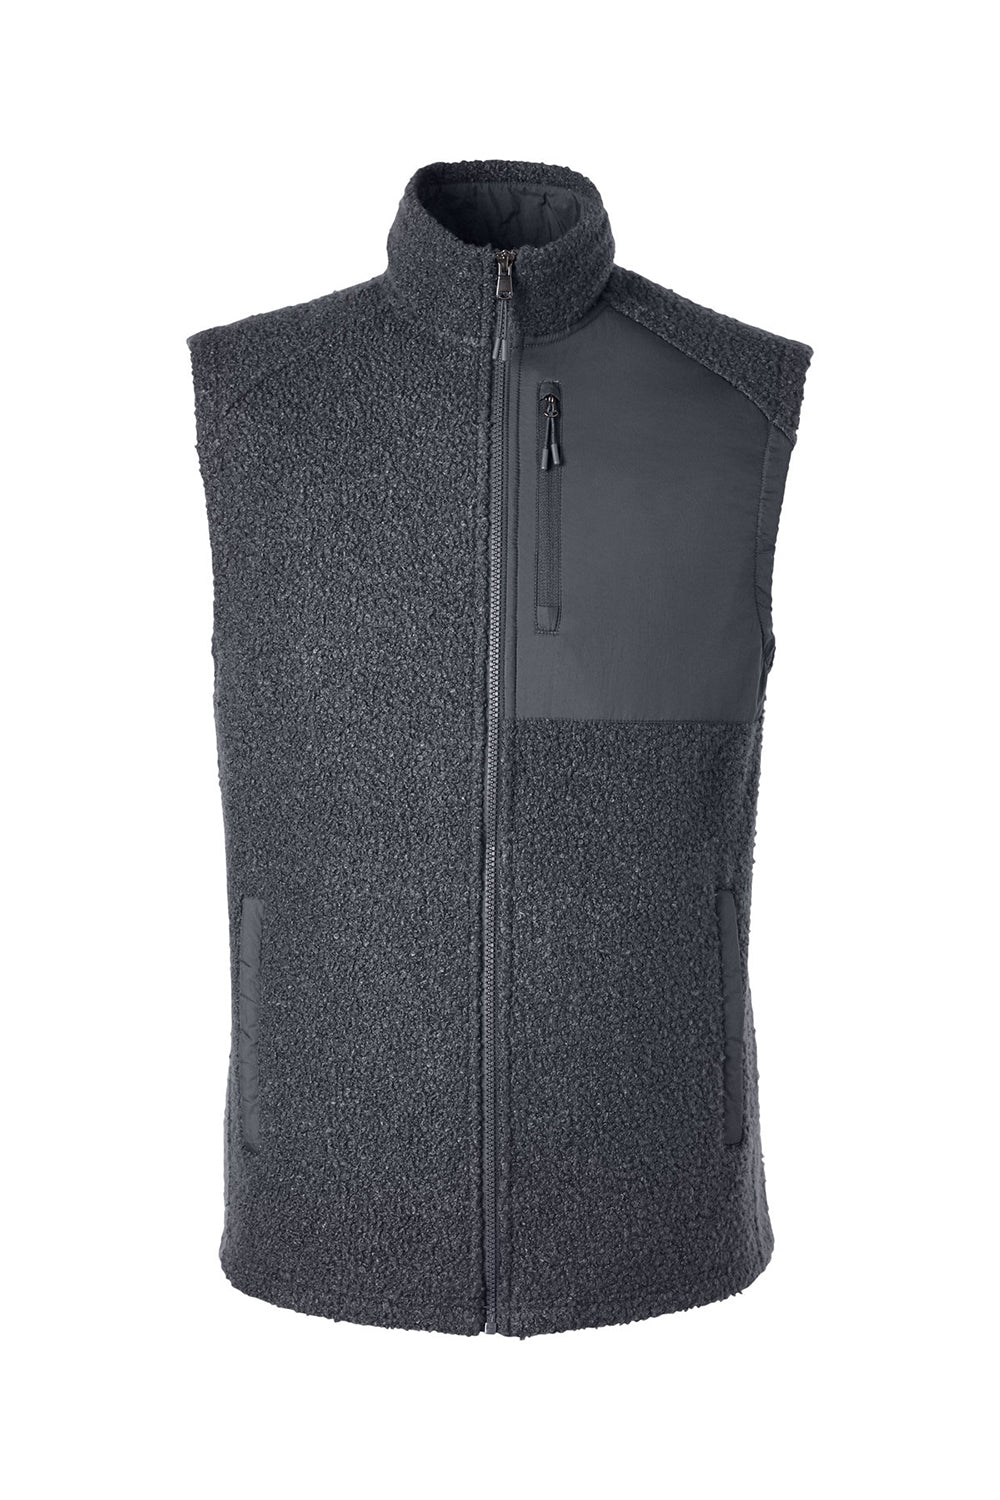 North End NE714 Mens Aura Sweater Fleece Full Zip Vest Carbon Grey Flat Front